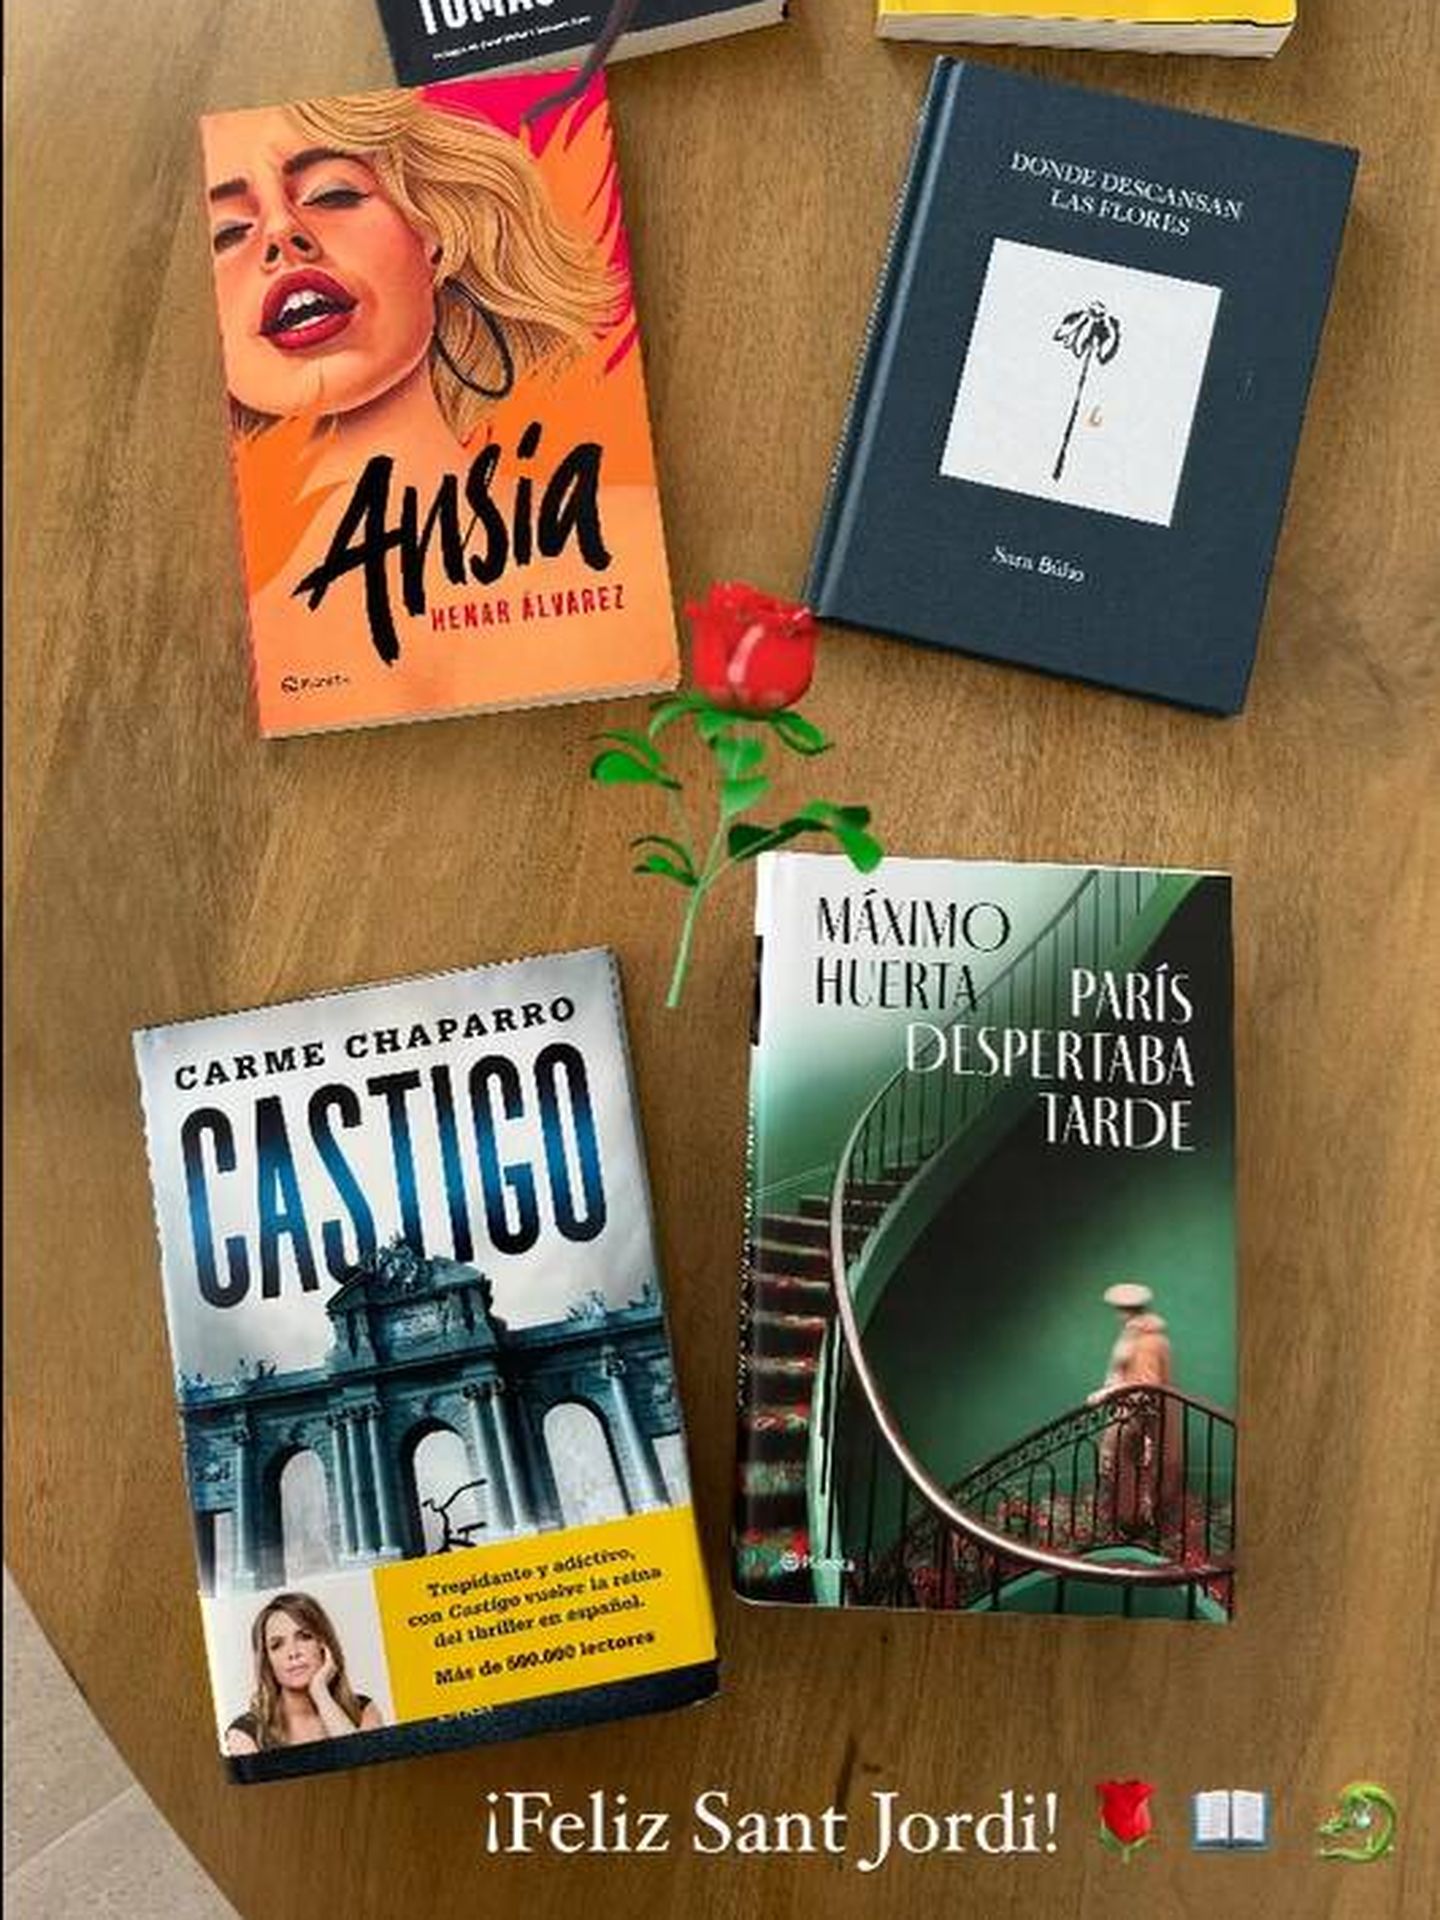 Los libros que le han regalado a Nagore Robles en Sant Jordi. (Instagram/@nagore_robles)